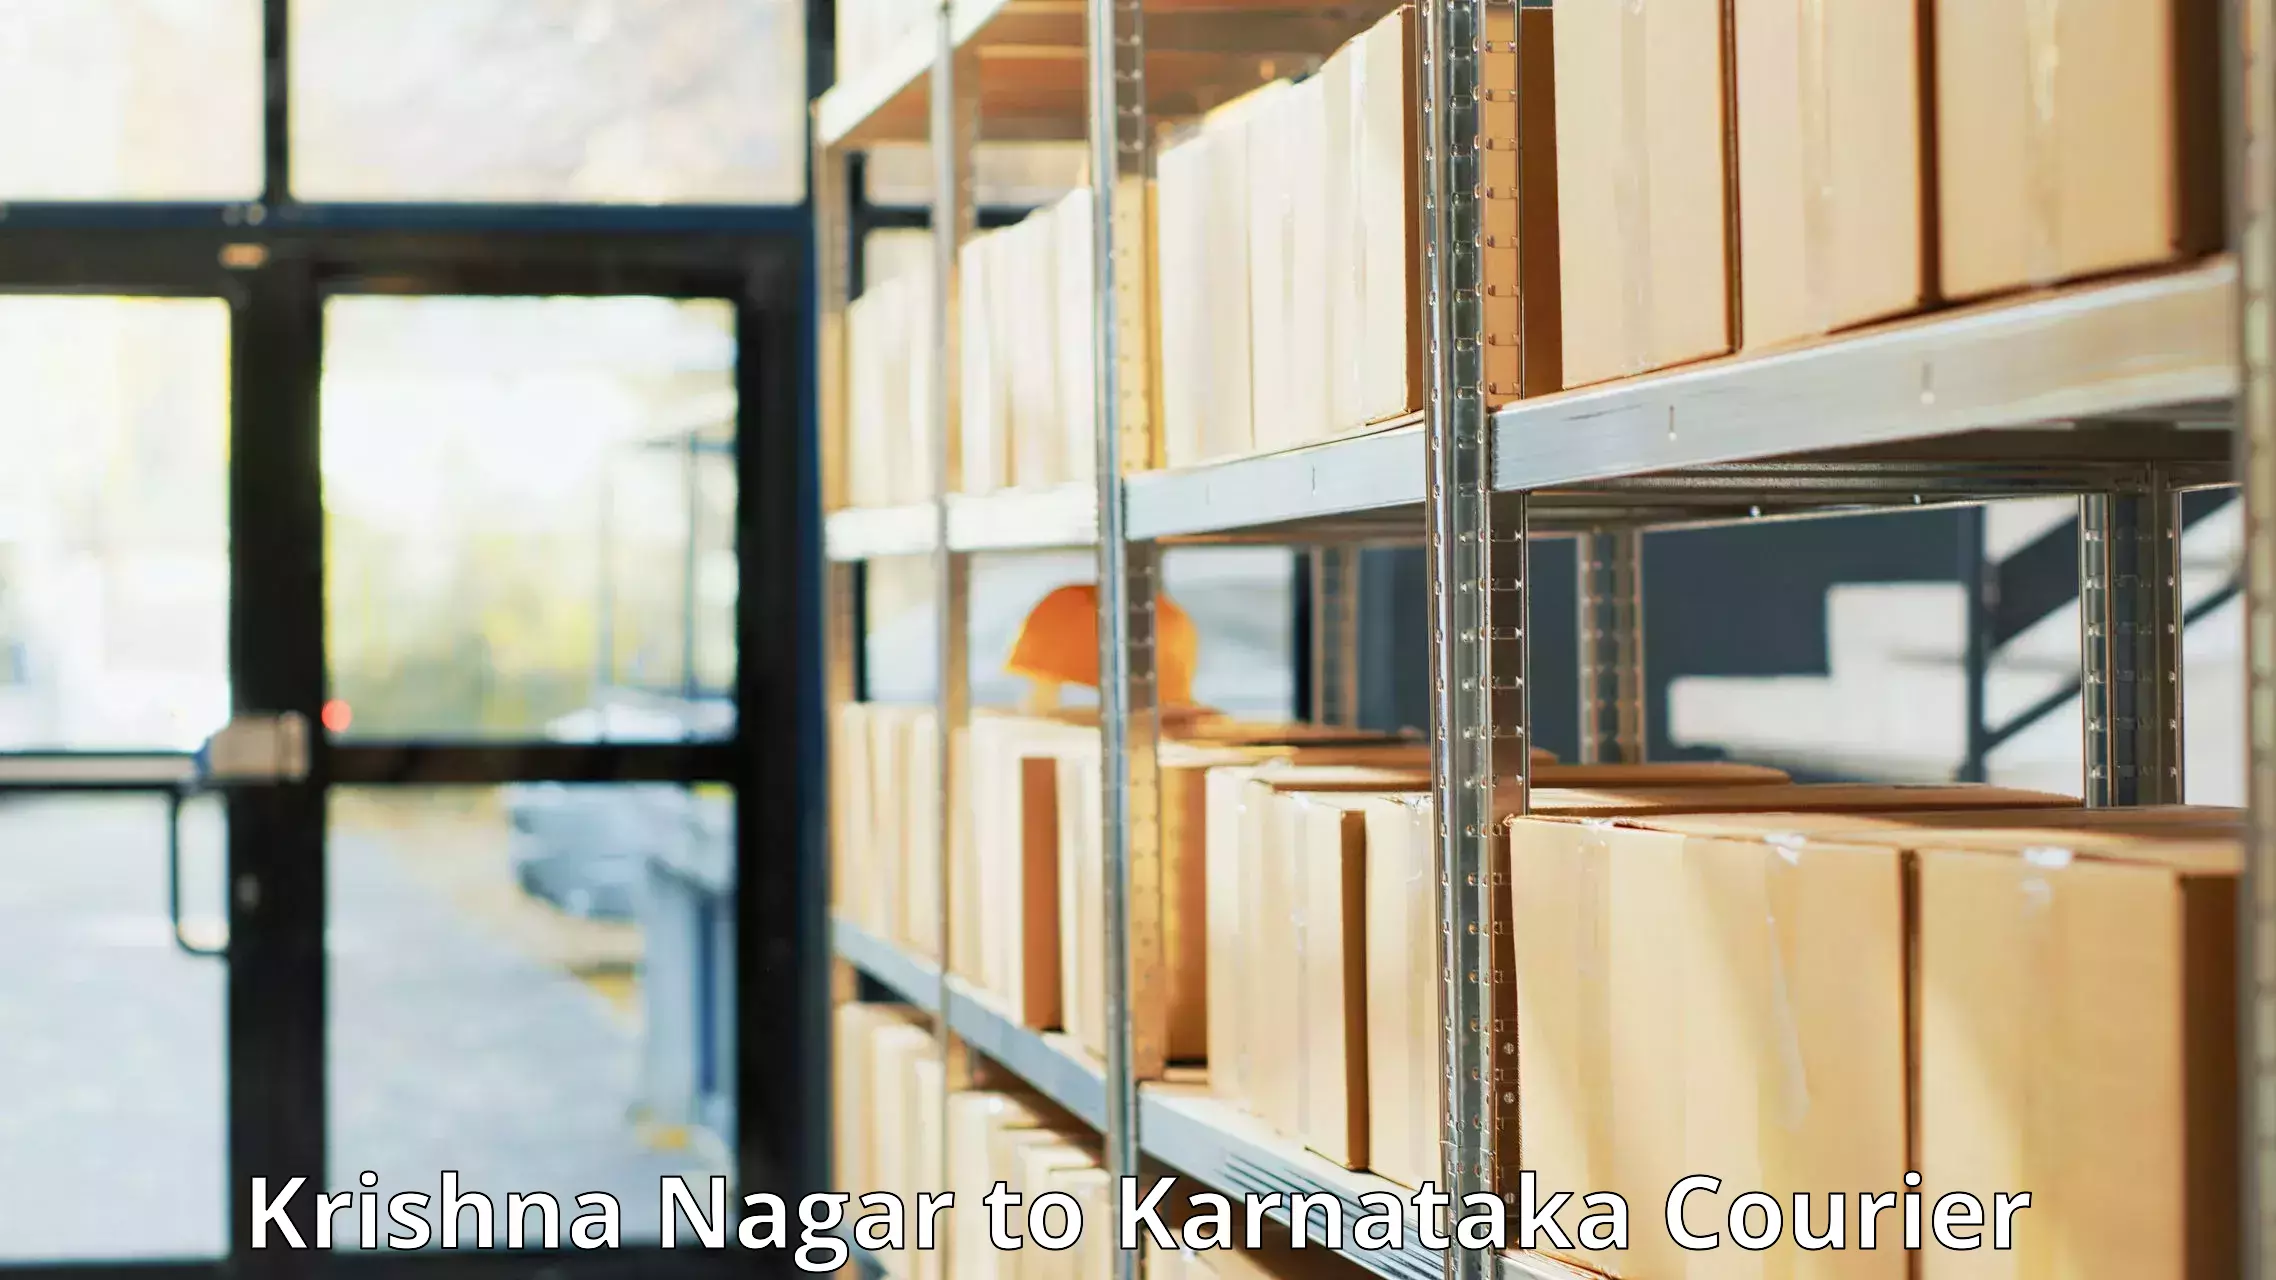 Multi-city courier Krishna Nagar to Karnataka